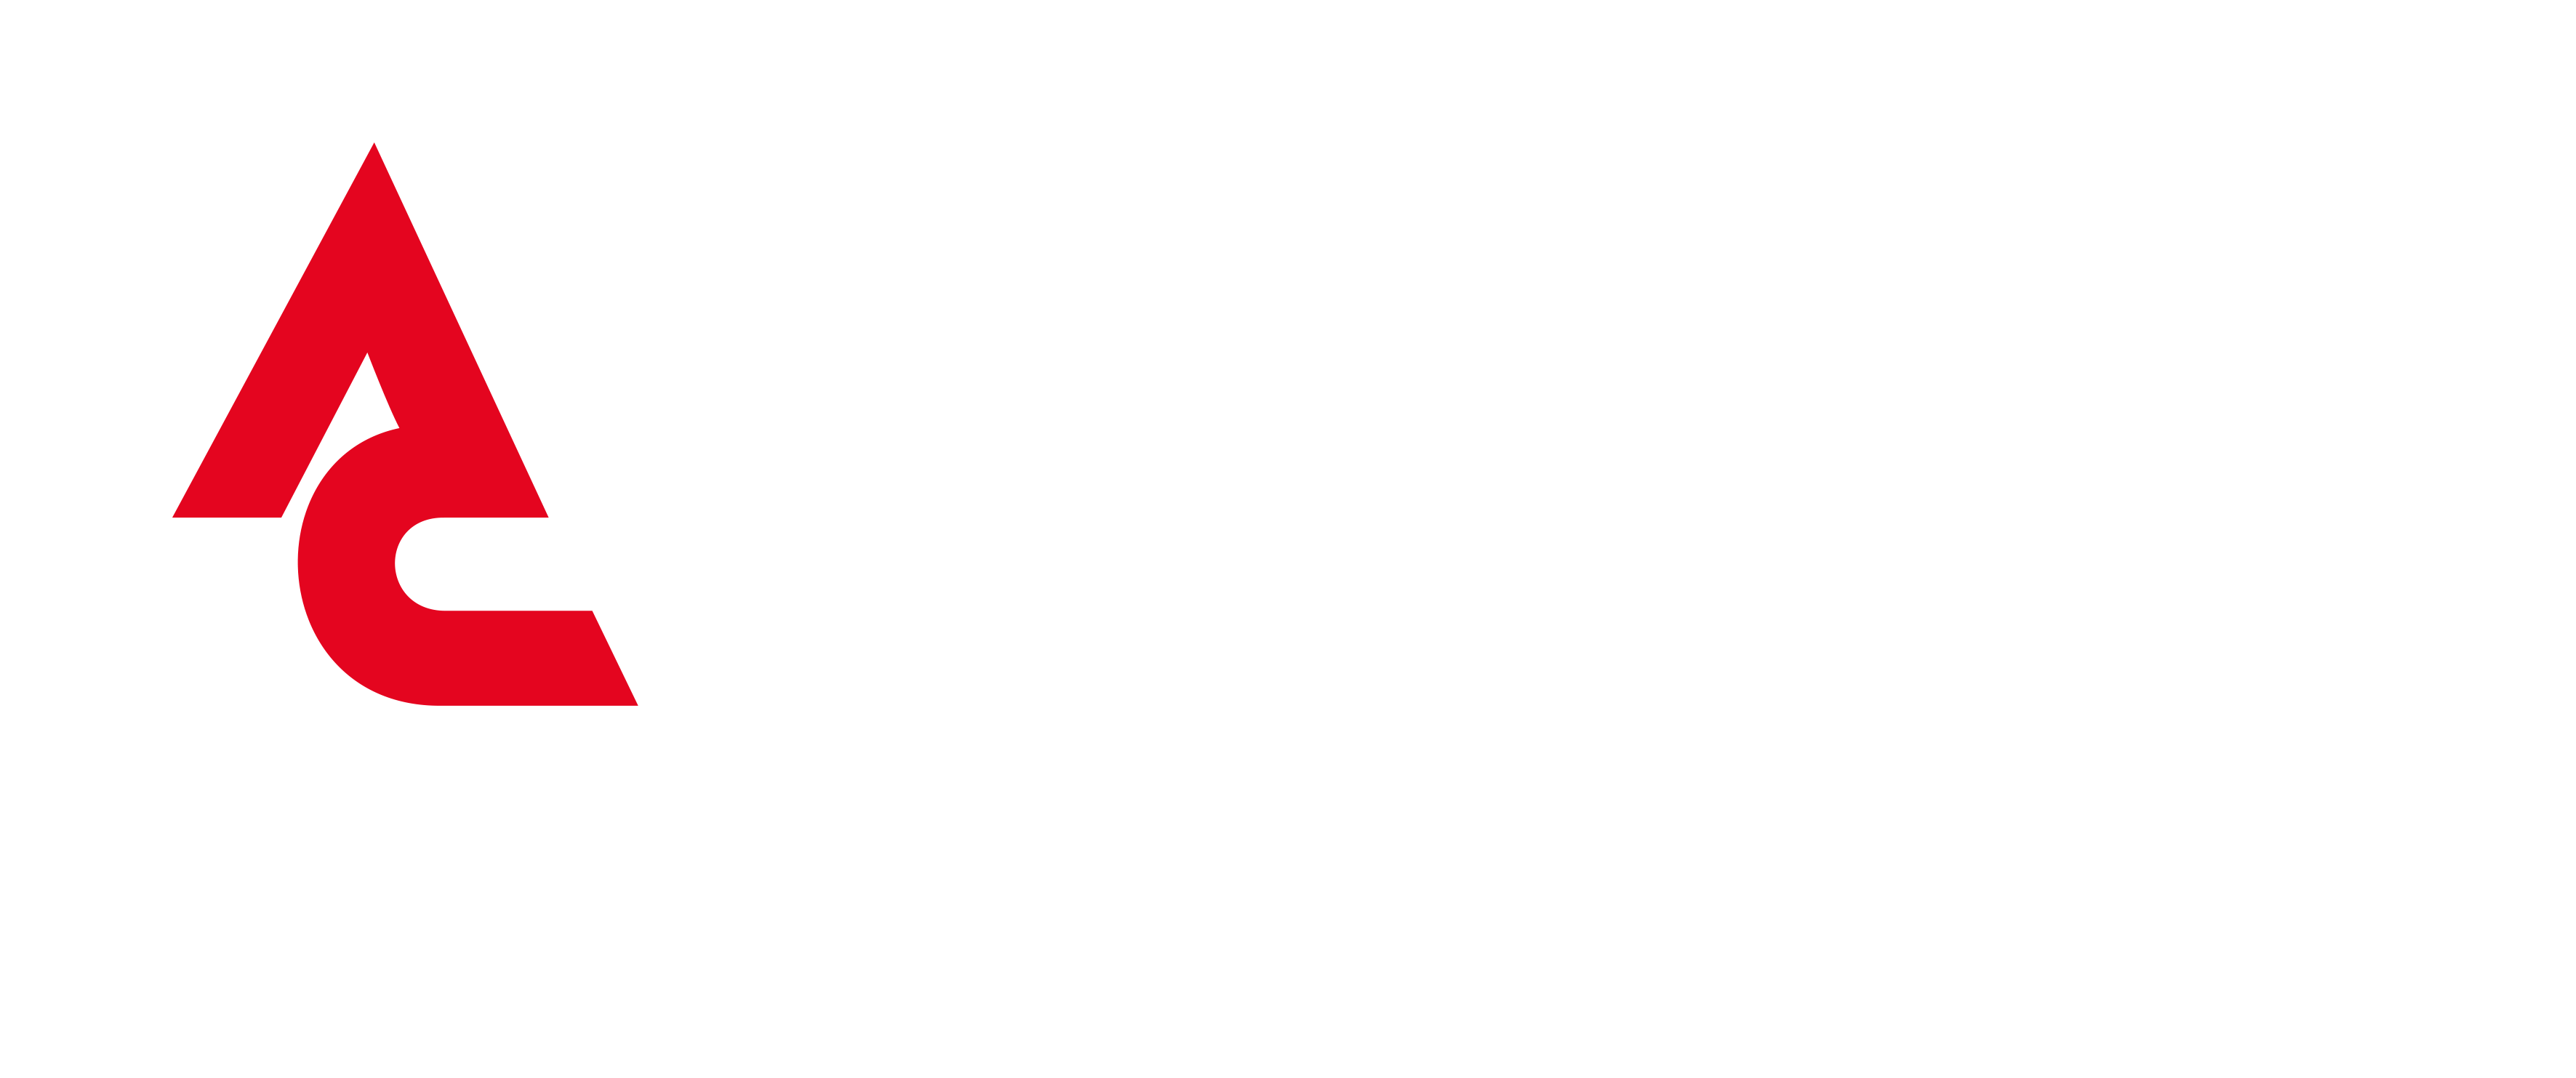 Acrylicon Brand URF On Black High